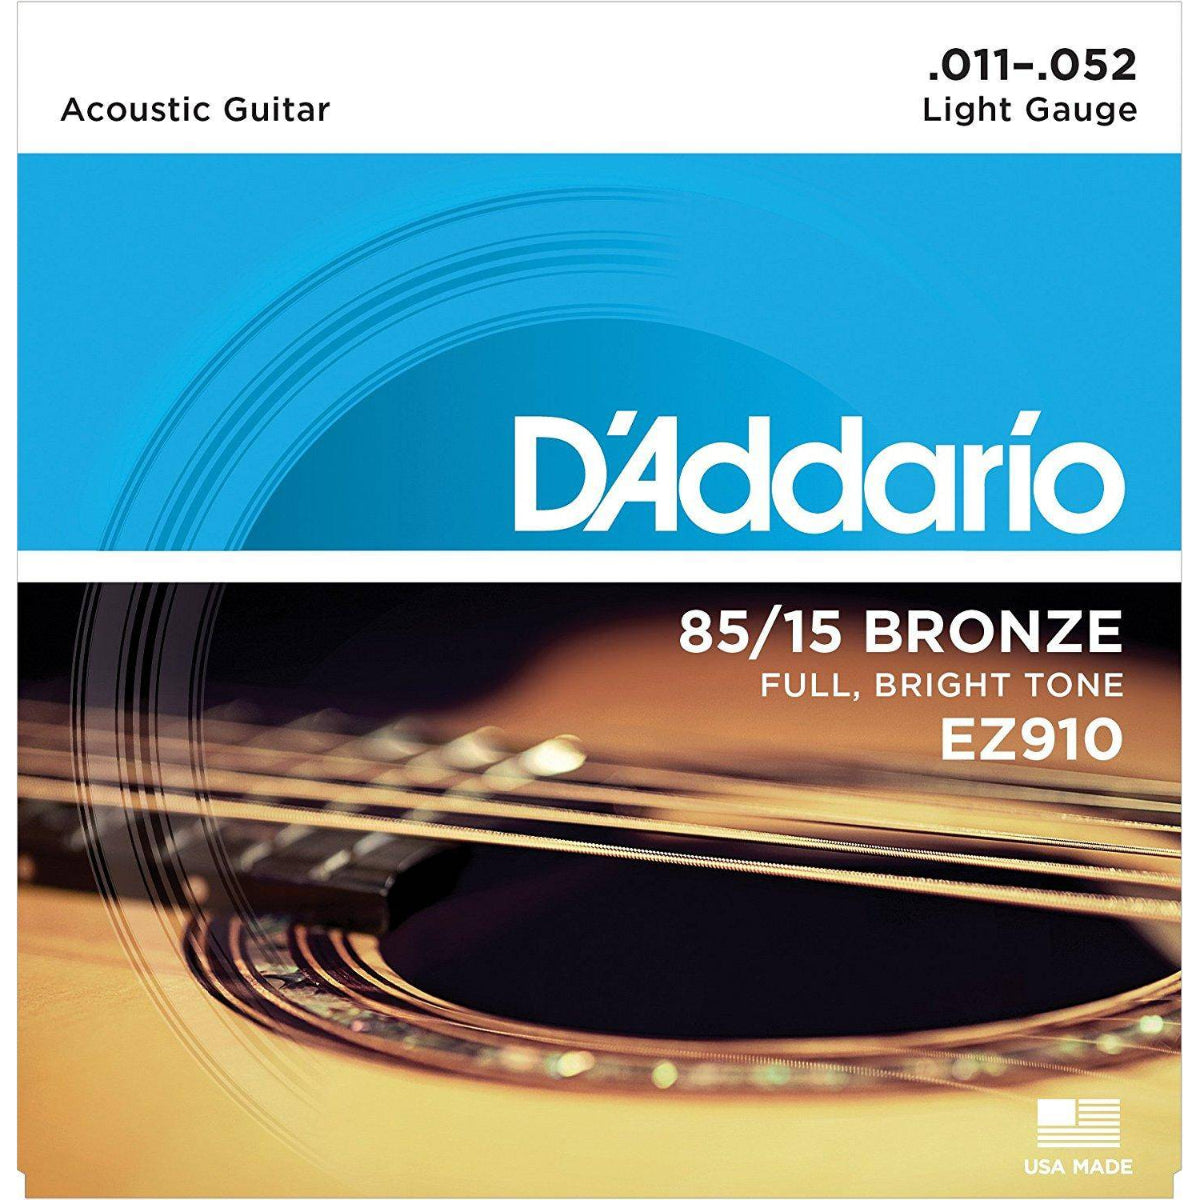 D'Addario EZ910 85/15 Bronze Acoustic Guitar Strings 011-052